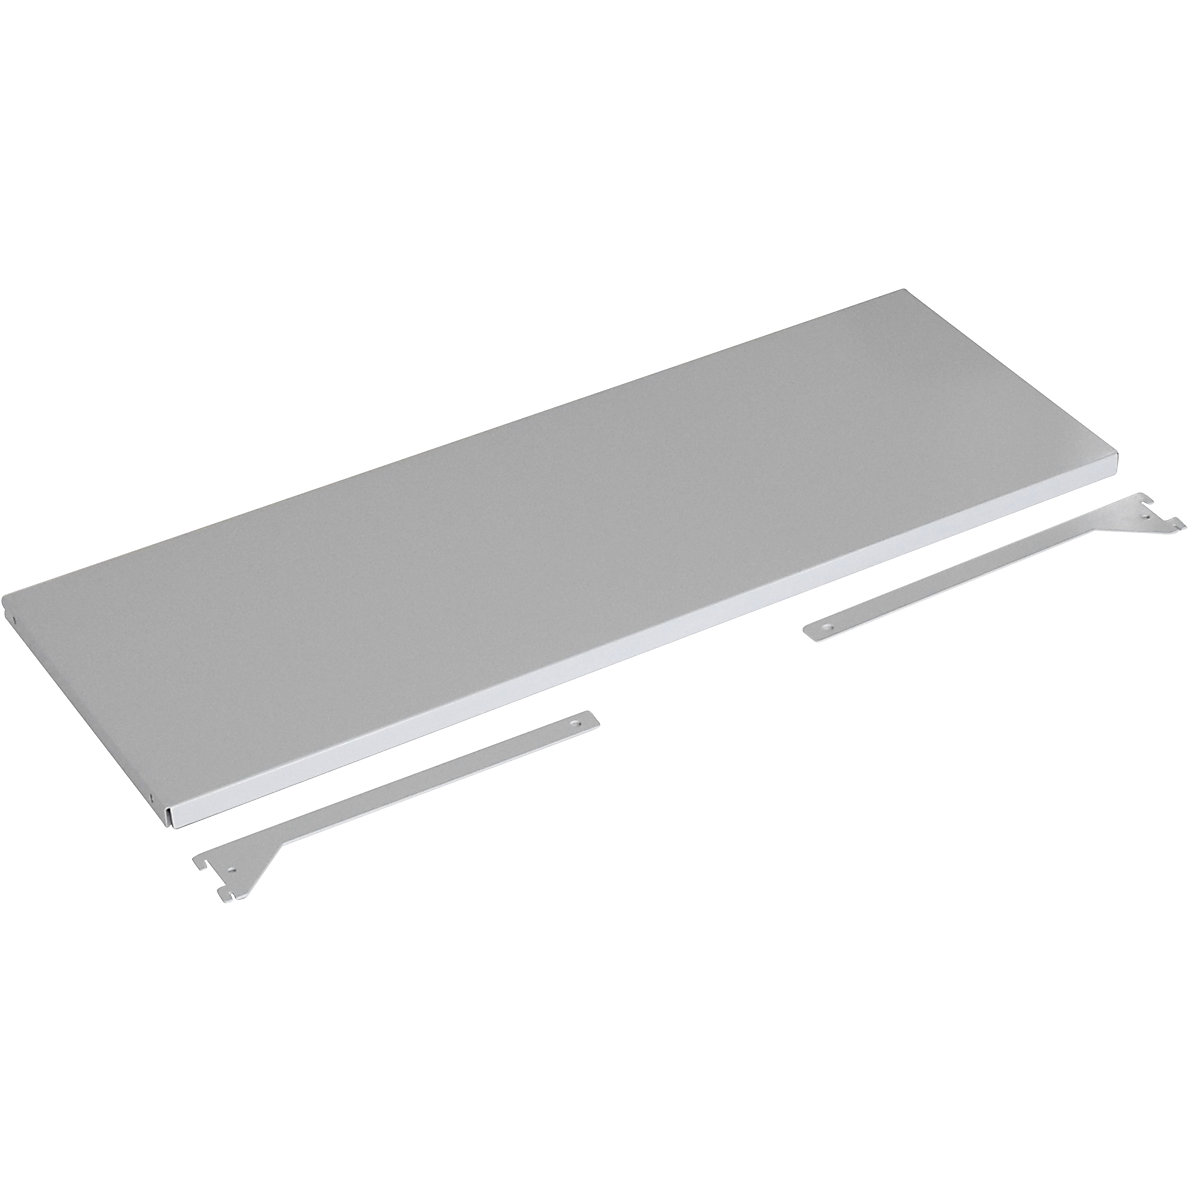 Wall shelf unit shelves incl. console brackets – hofe, sheet steel, plastic-coated, width x depth 1000 x 375 mm